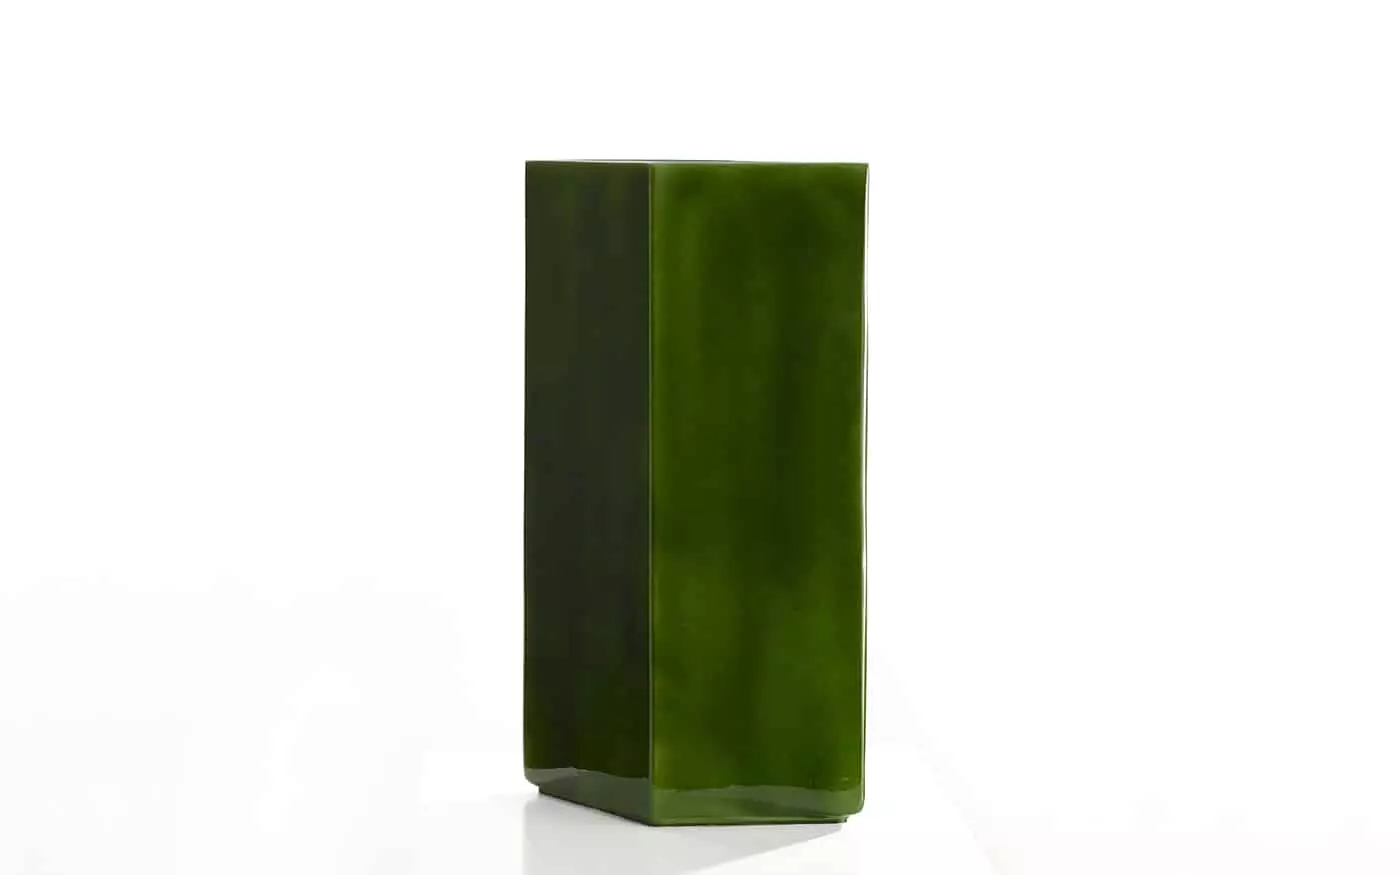 Vase Losange 84 green - Ronan & Erwan Bouroullec - Mirror - Galerie kreo